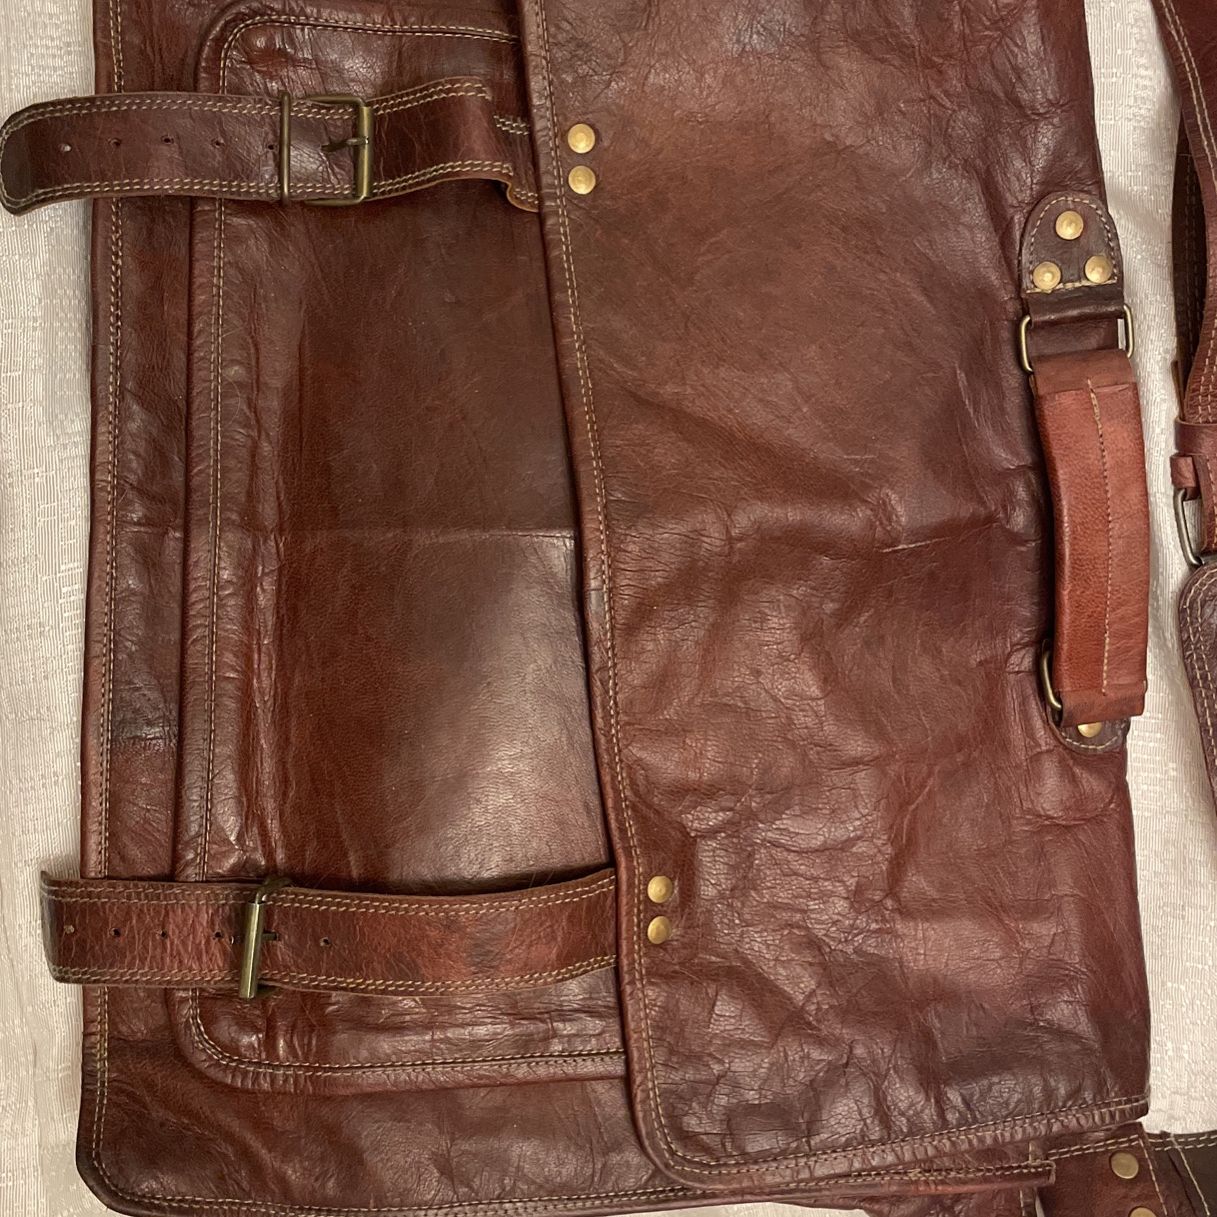 Vintage Coach Shoulder Bag for Sale in Sun City, AZ - OfferUp